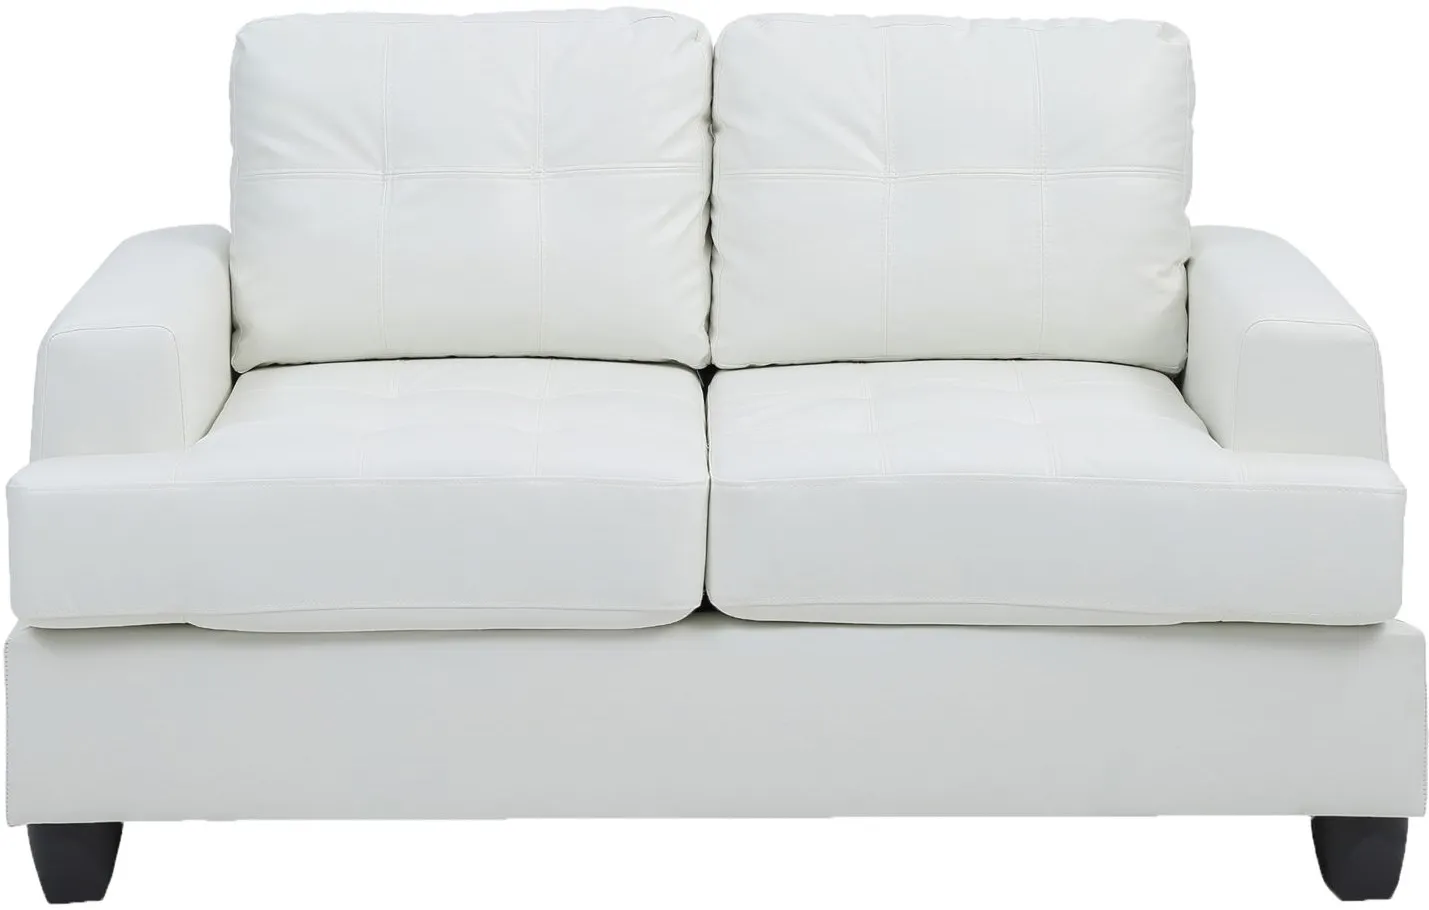 Sandridge Loveseat in White by Glory Furniture